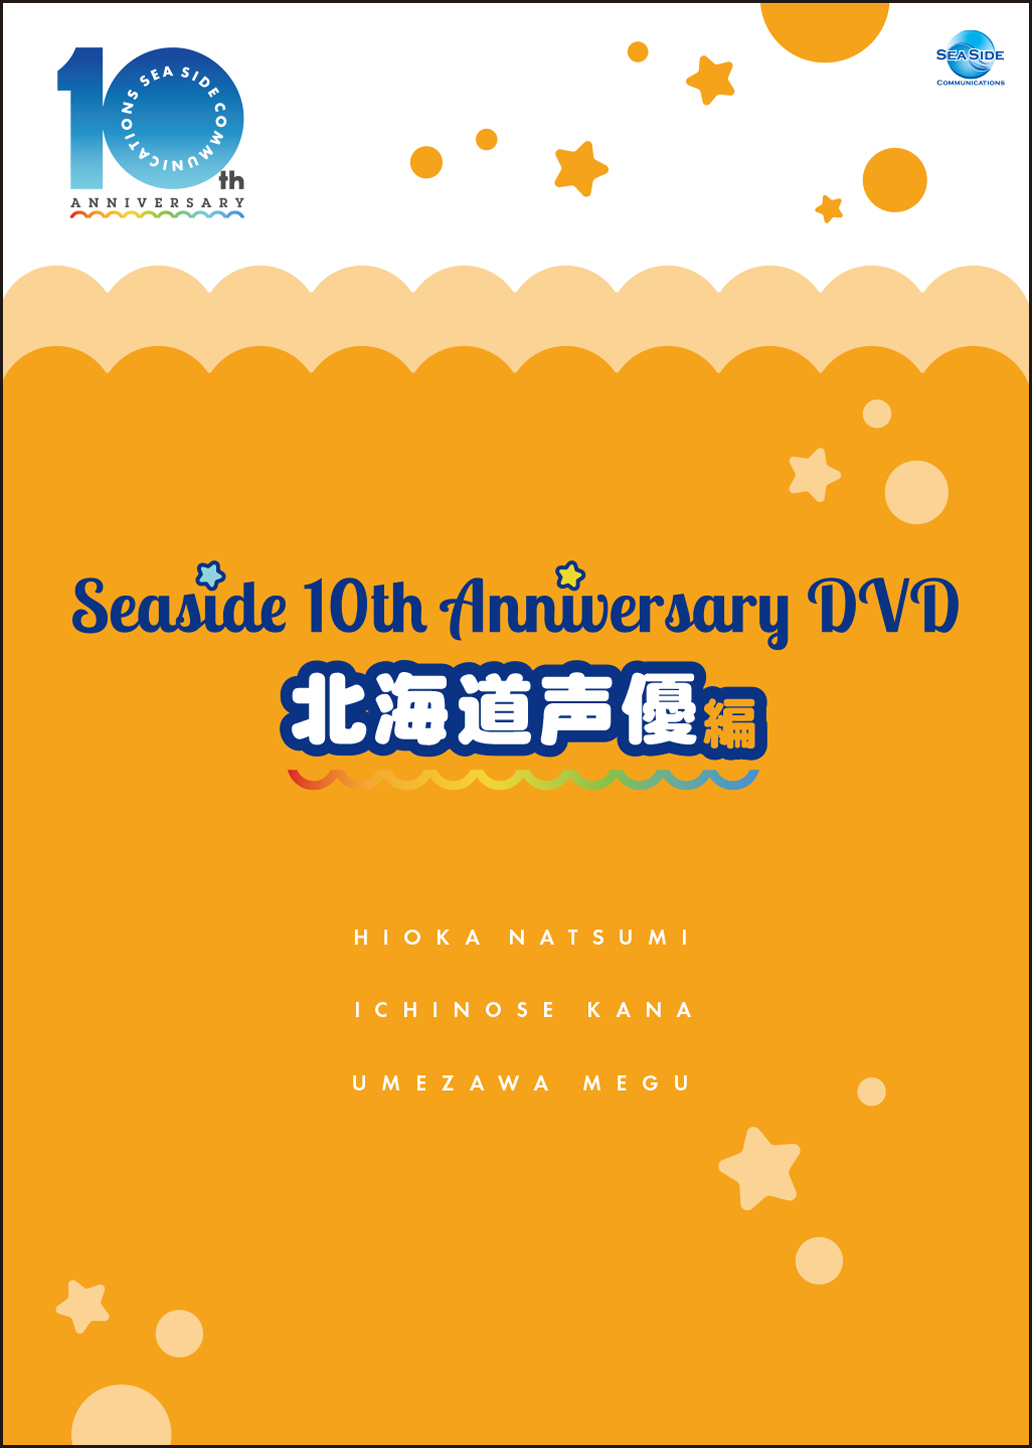 「SEASIDE 10th Anniversary DVD -北海道声優編-」発売決定!! 4月16日（土）DVD発売記念イベント開催決定!!